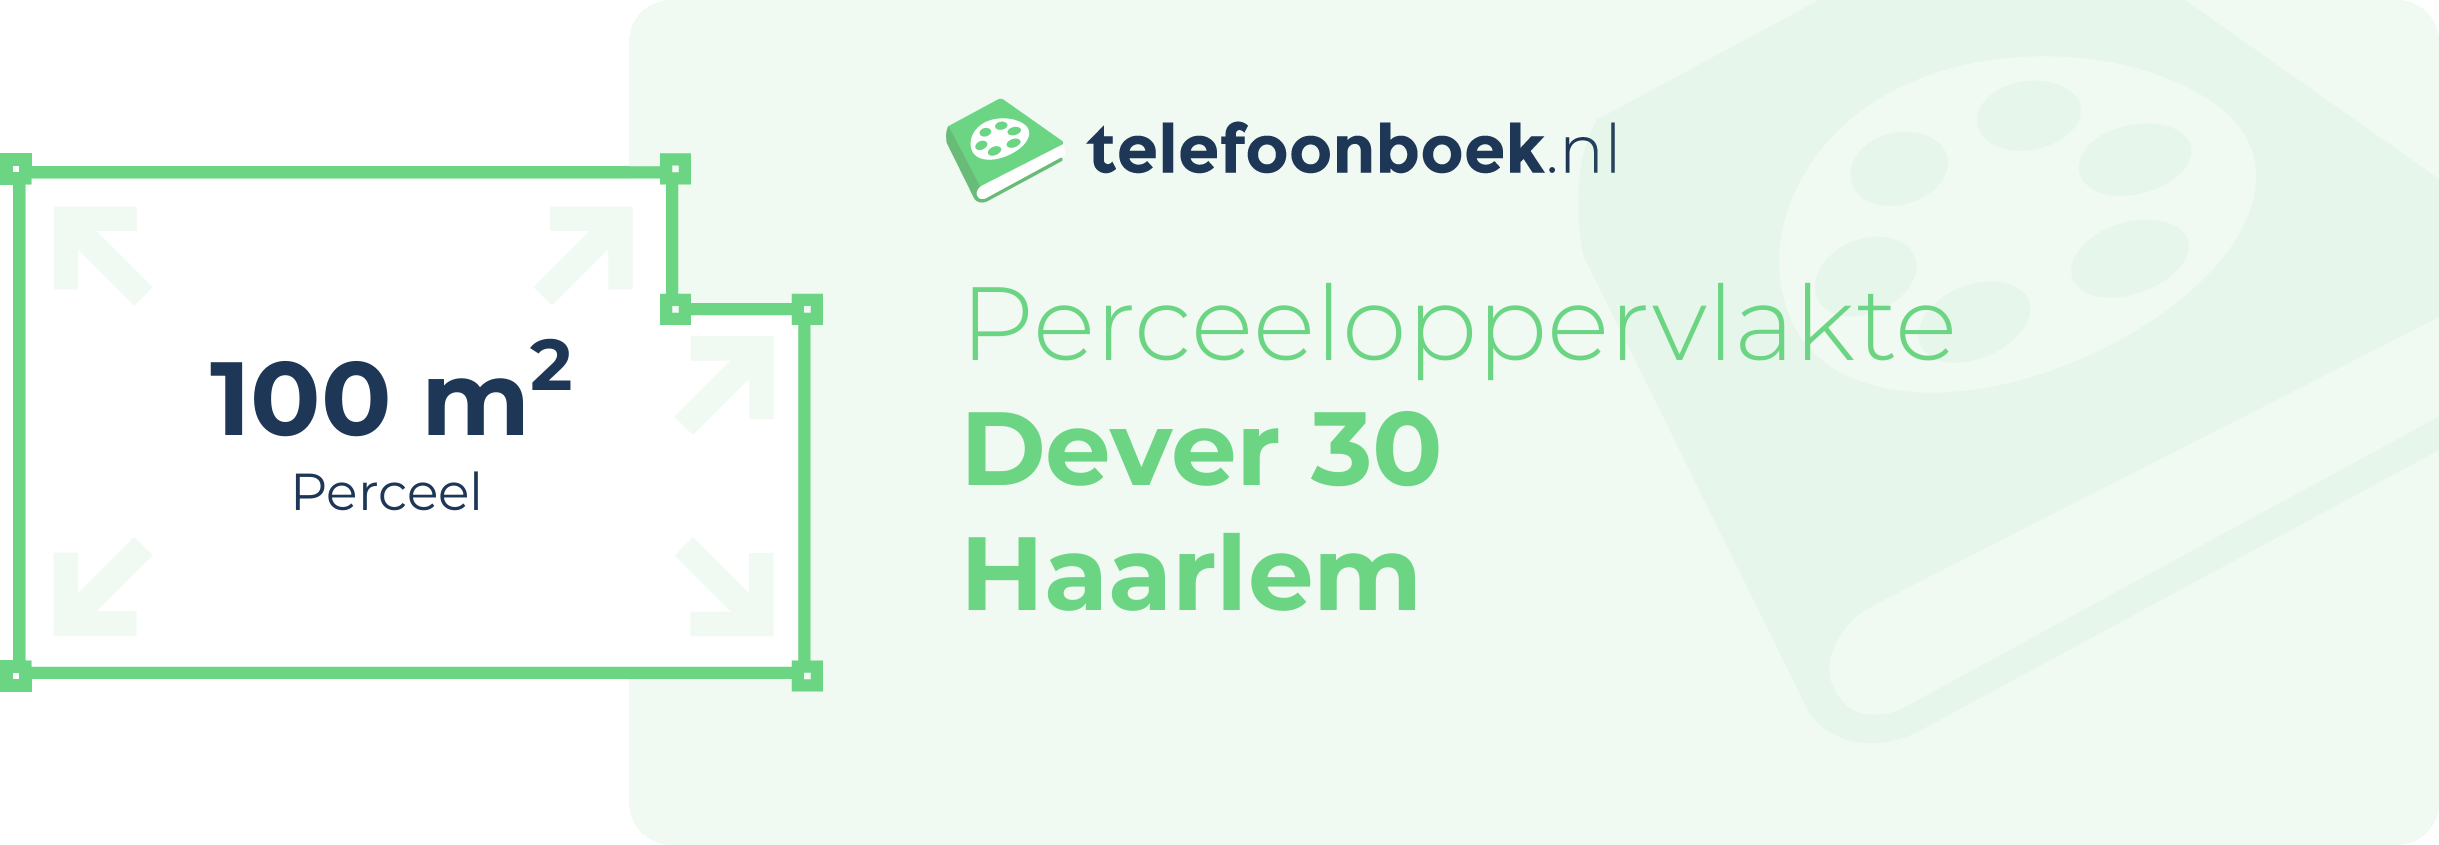 Perceeloppervlakte Dever 30 Haarlem